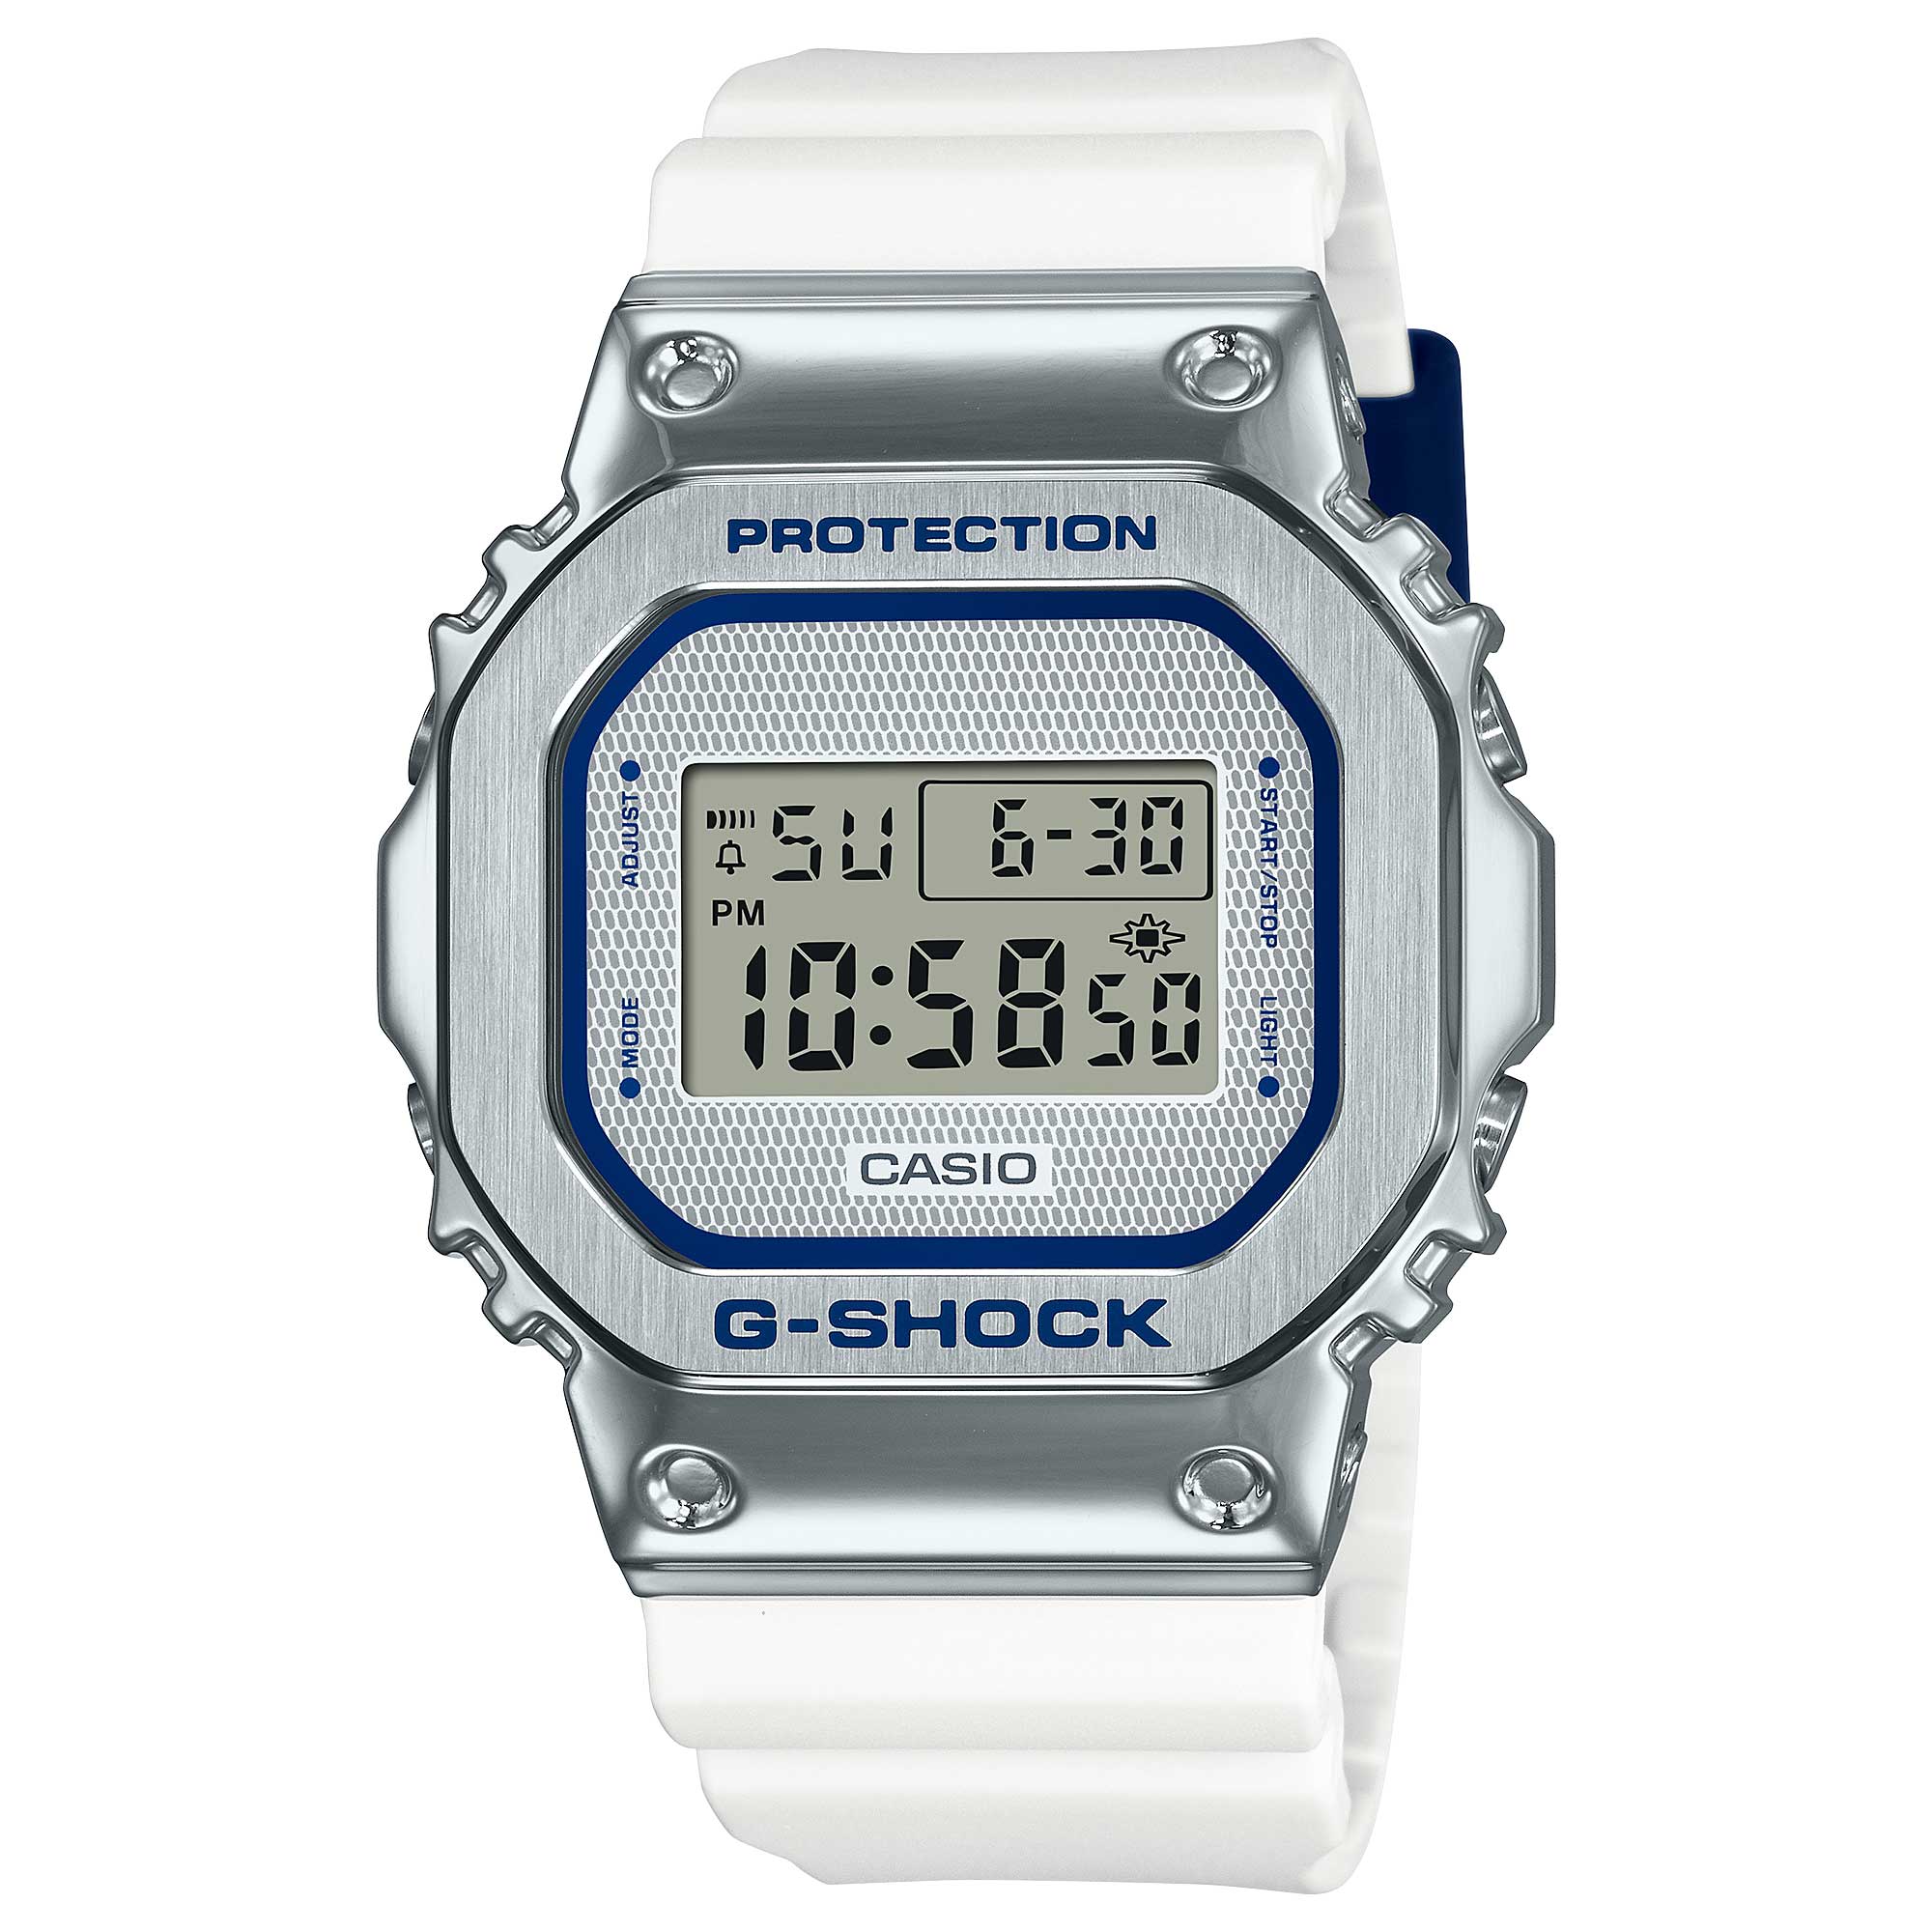 Casio G-Shock Gm-5600 Lineup Retro Design White Resin Band Watch Gm560 –  Watchspree